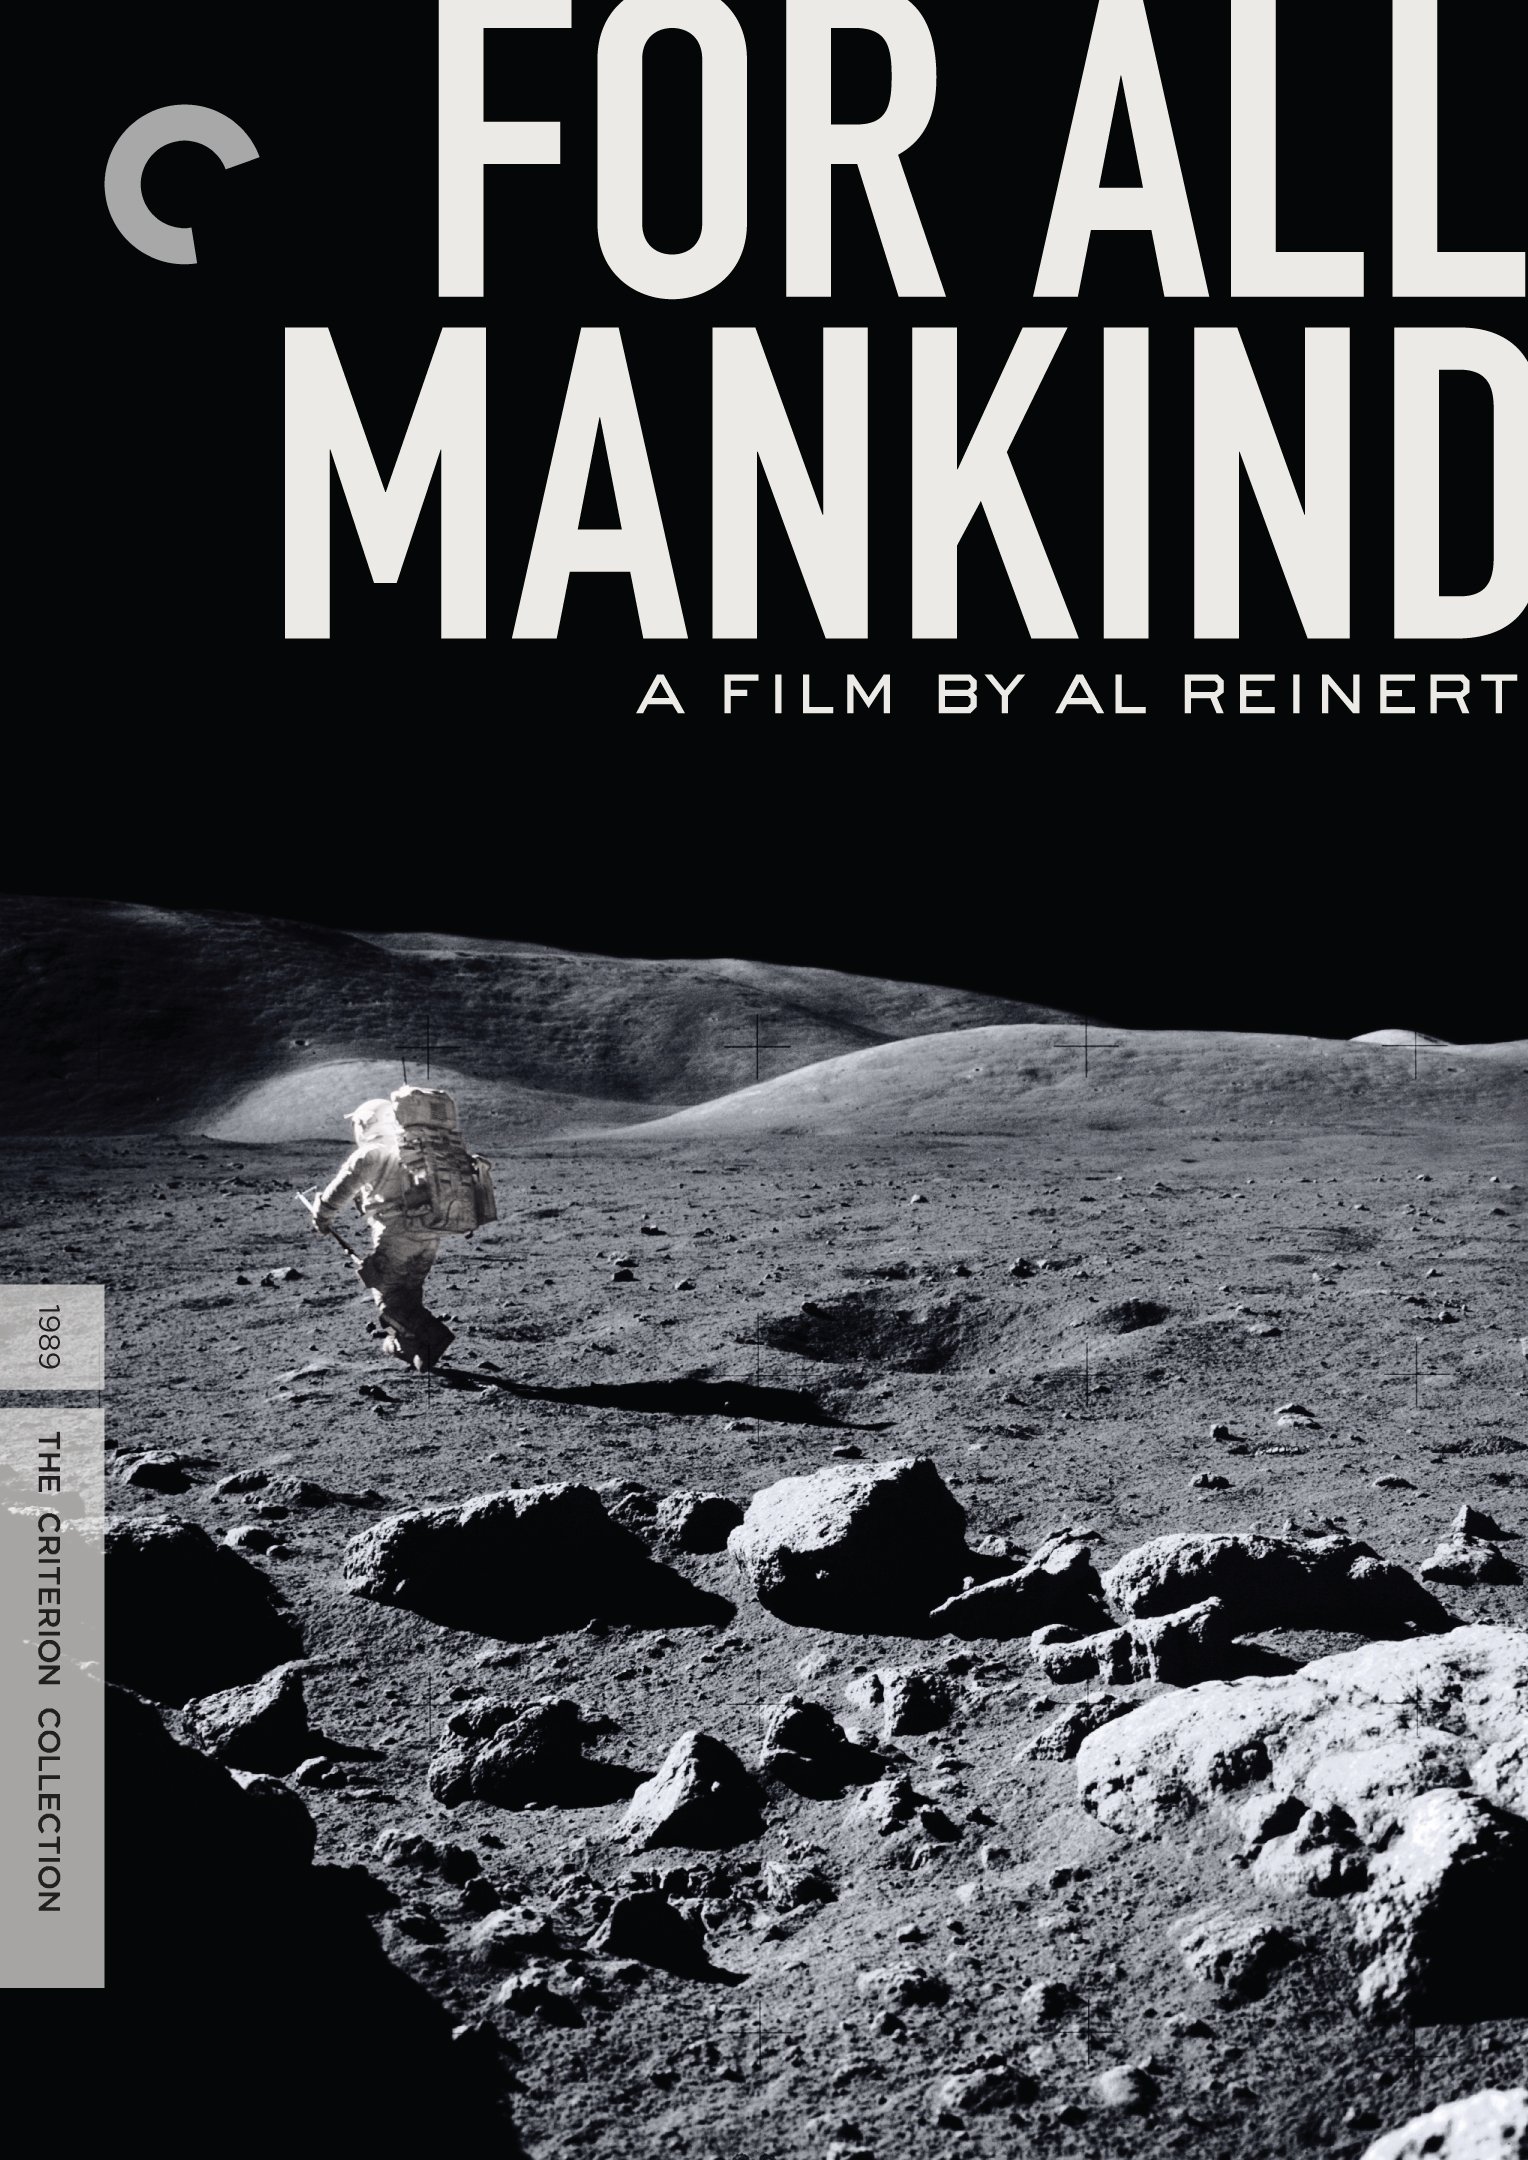 For All Mankind (1989) [HD Digital] $4.99@ Amazon Prime Video